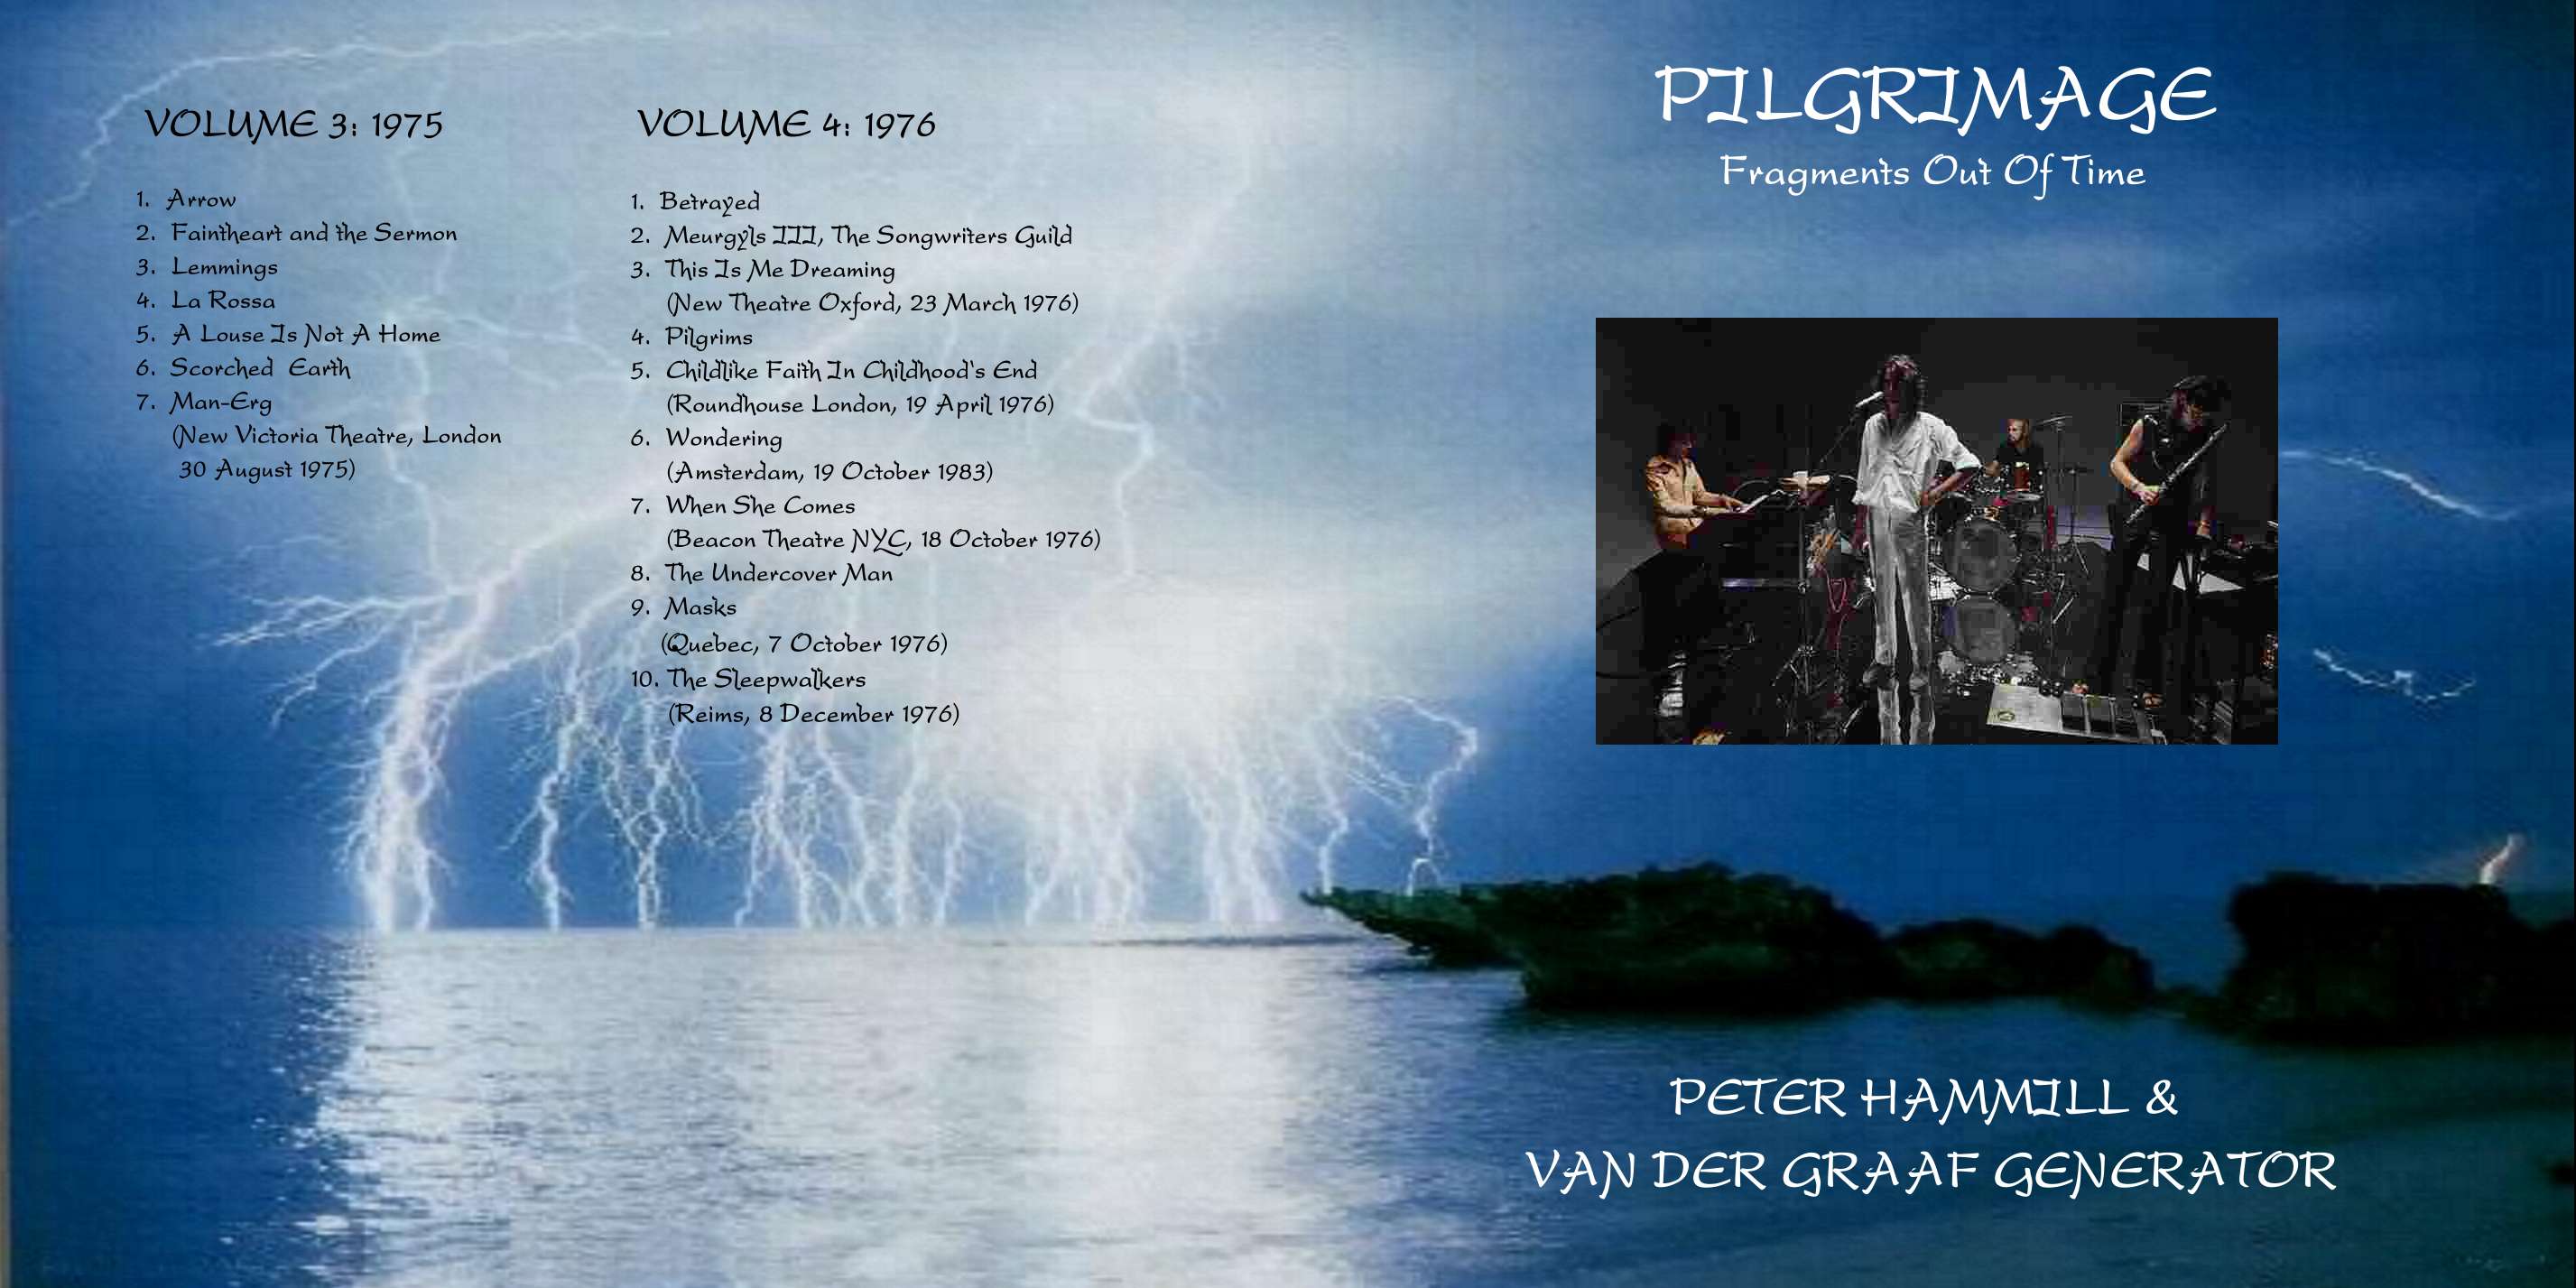 VanDerGraafGeneratorPeterHammill1970-1986Pilgrimage_CD03-04 (1).jpg